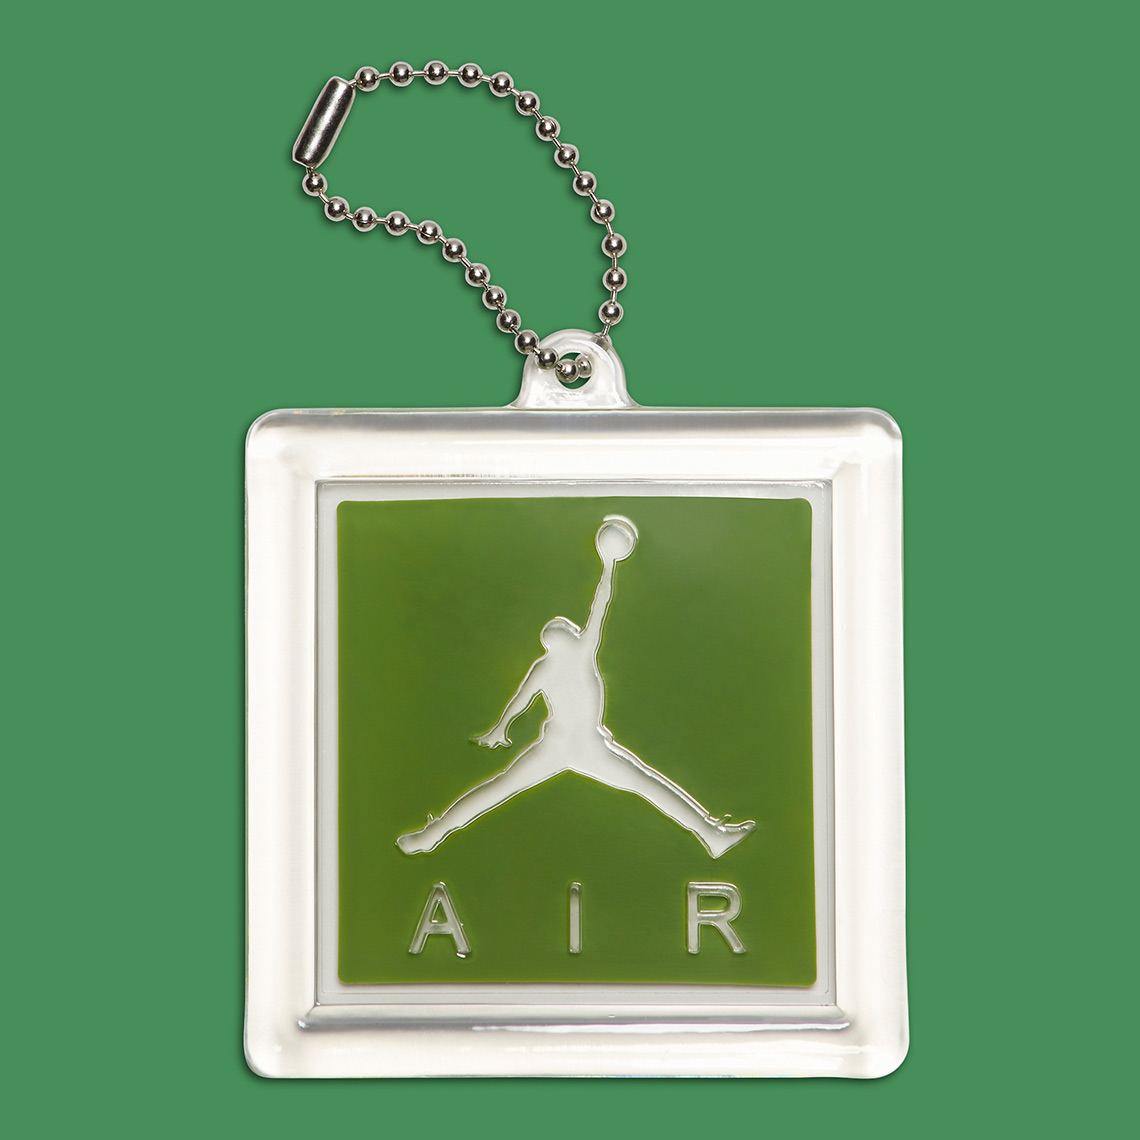 Air Jordan 3 Trainer 1 Chlorophyll 136064 006 2